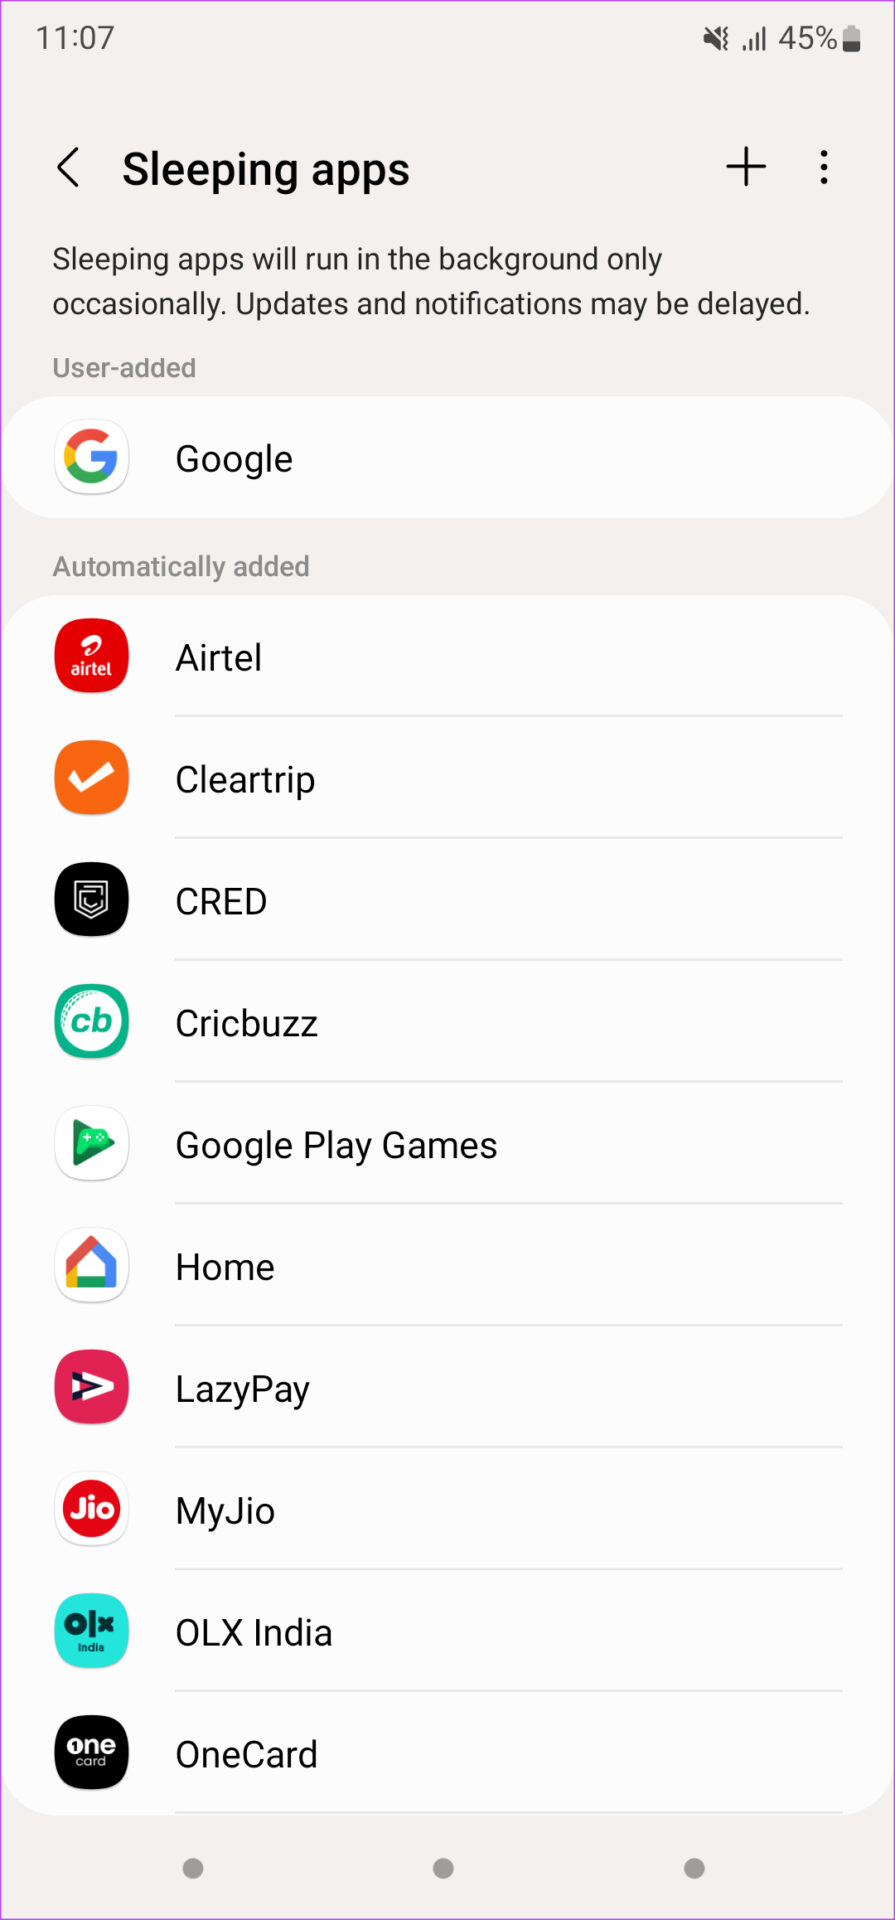 list of sleeping apps